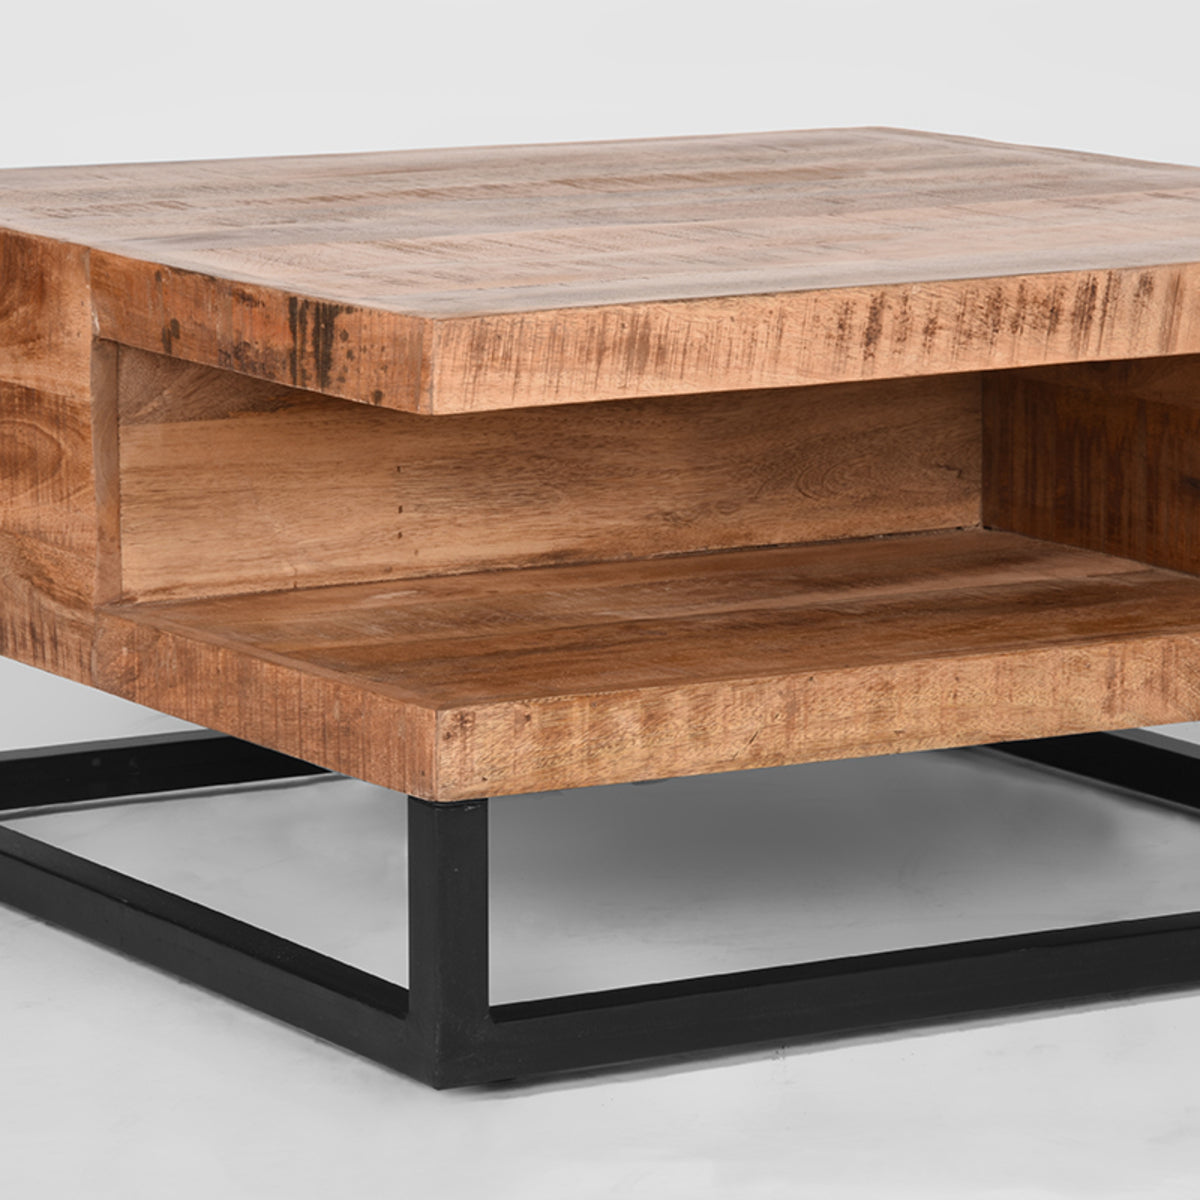 LABEL51 Coffee table Cube - Rough - Mango wood